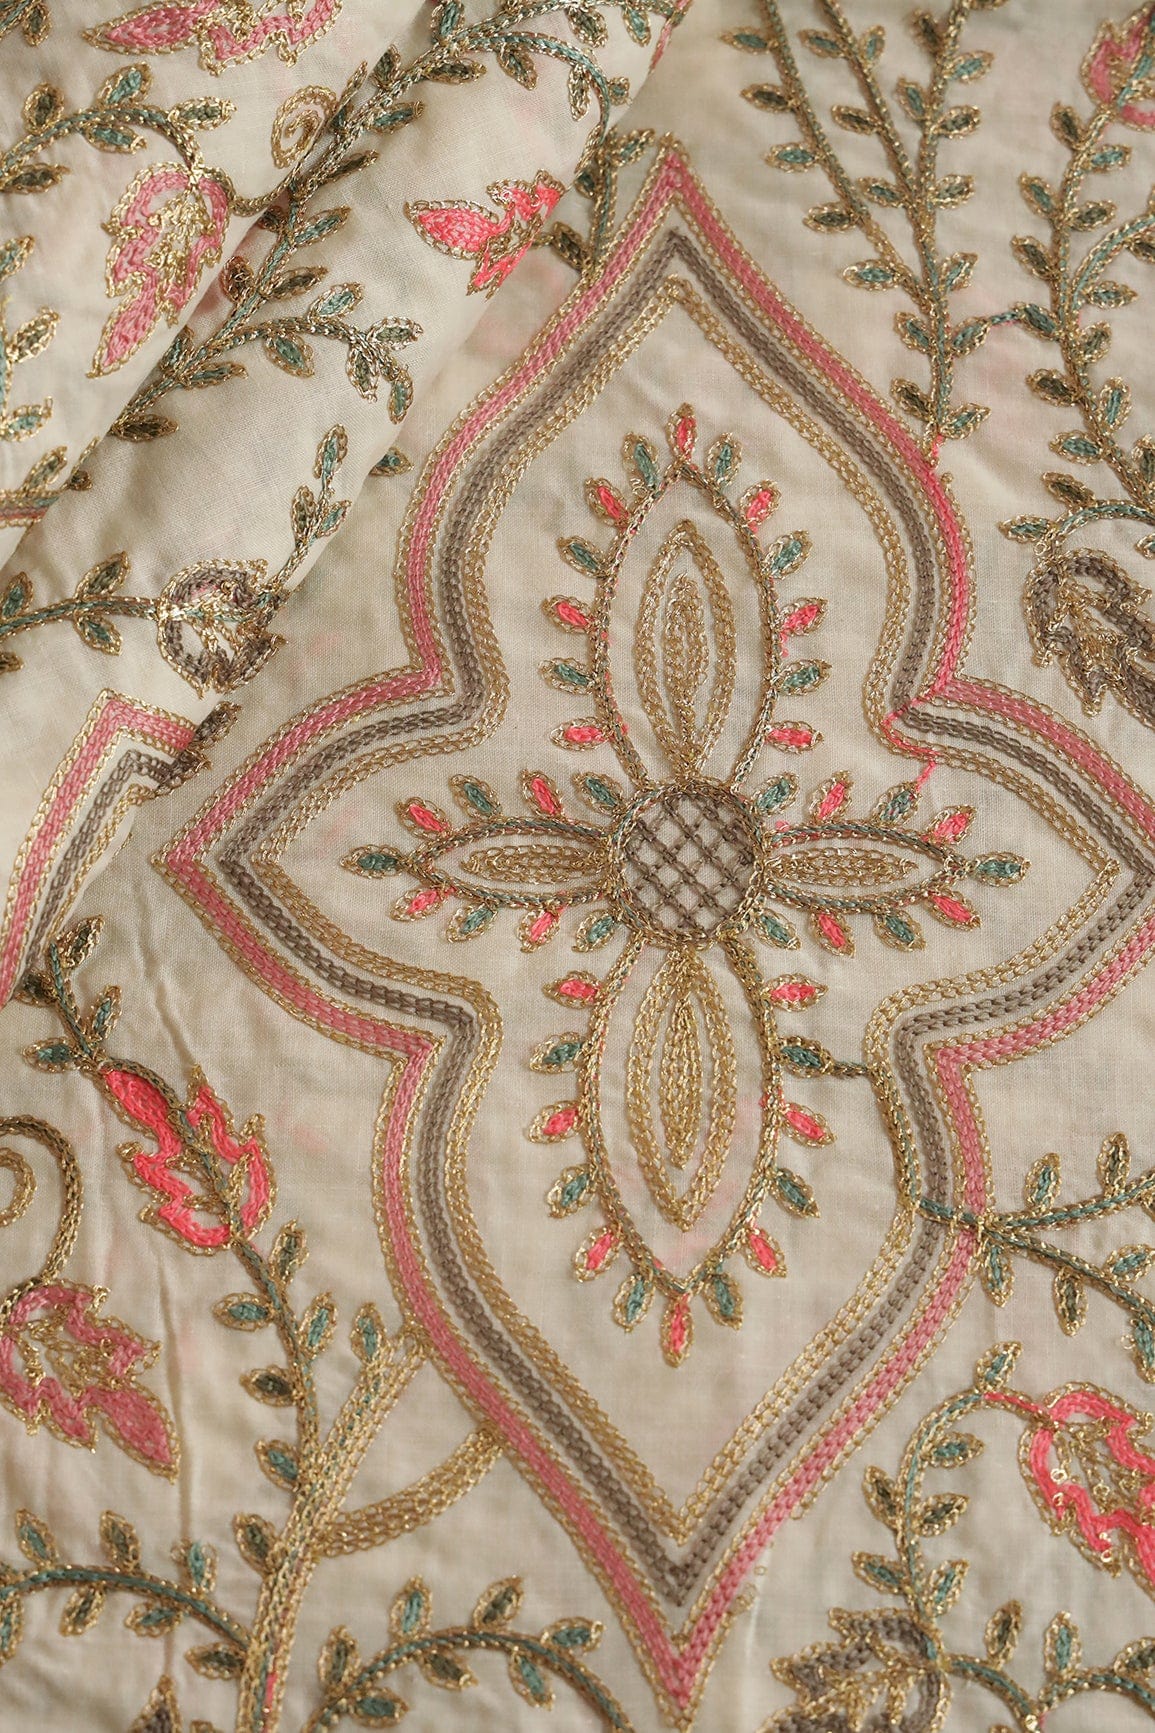 doeraa Embroidery Fabrics Multi Thread Beautiful Heavy Traditional Kashmiri Embroidery Work On Off White Cotton Fabric